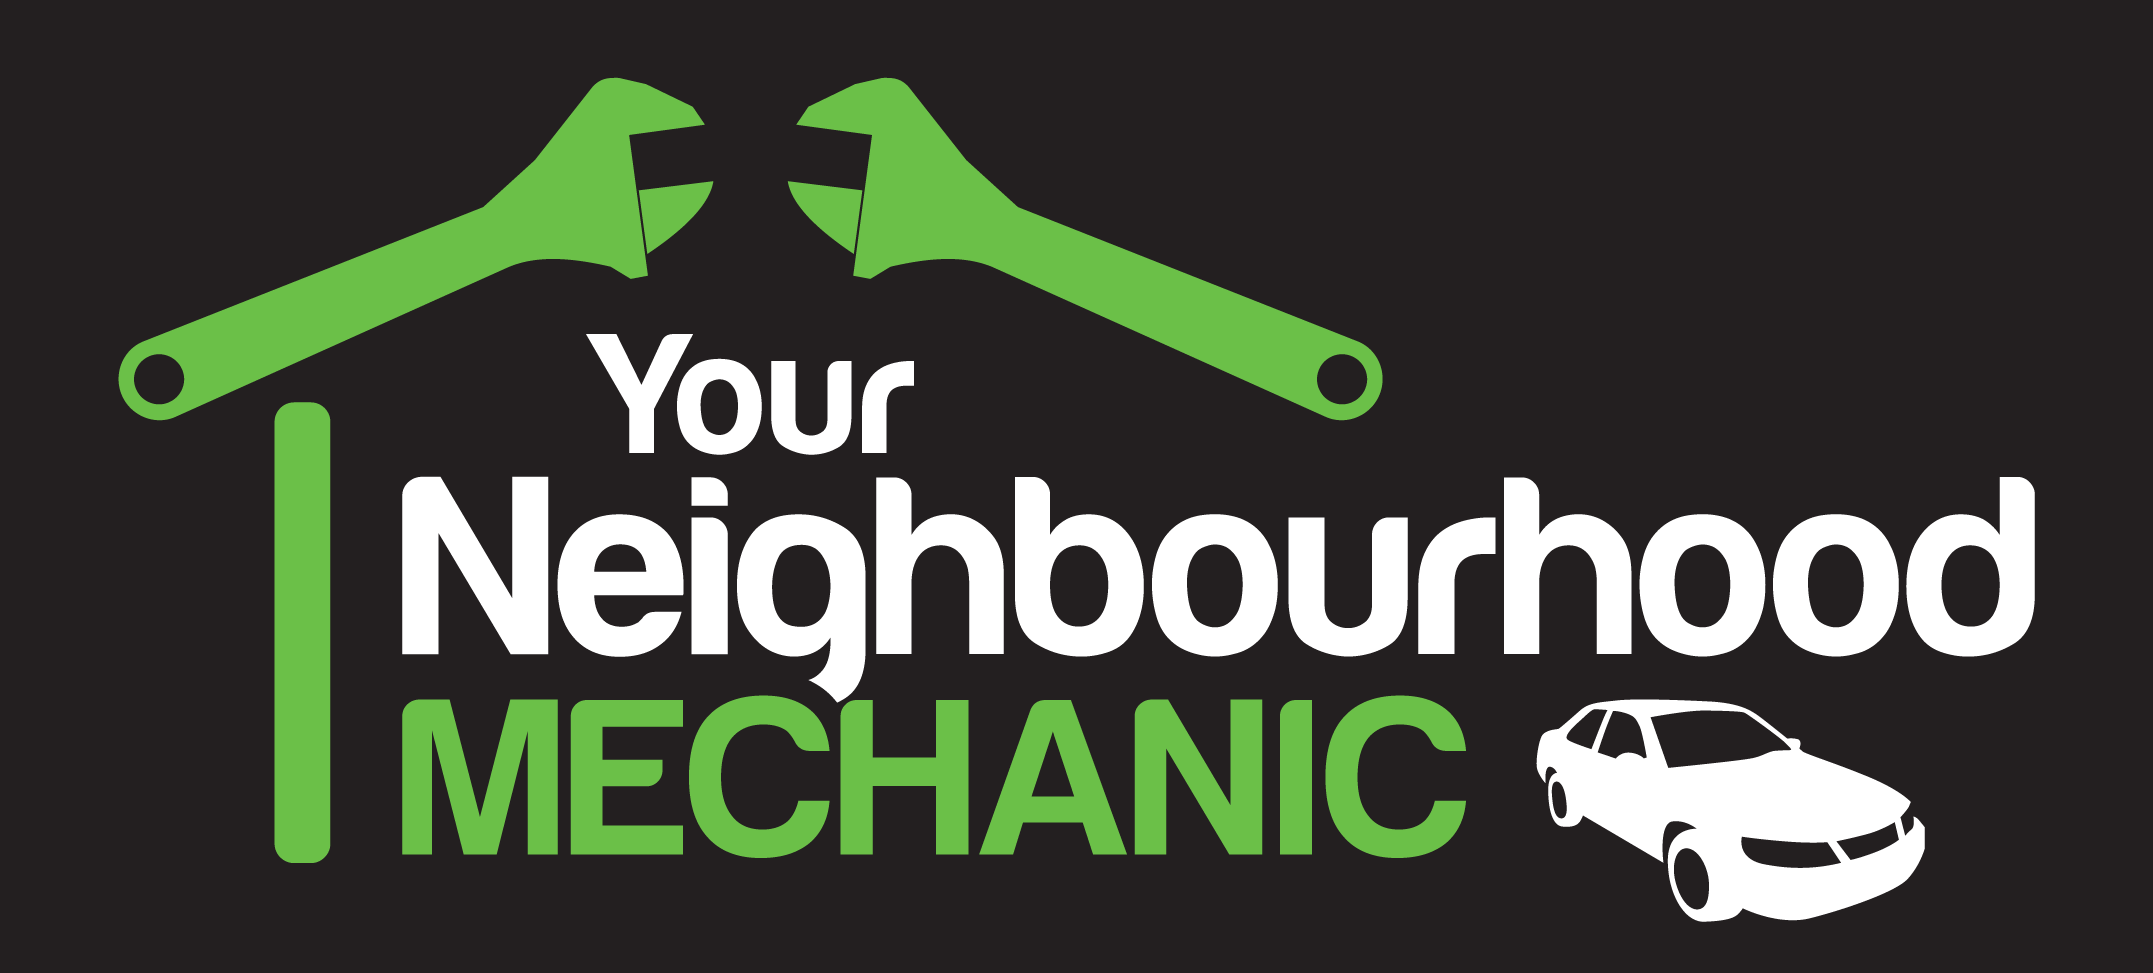 Automobile Mechanic Logo - Car Repair. Auto Mechanic. Your Neighbourhood Mechanic